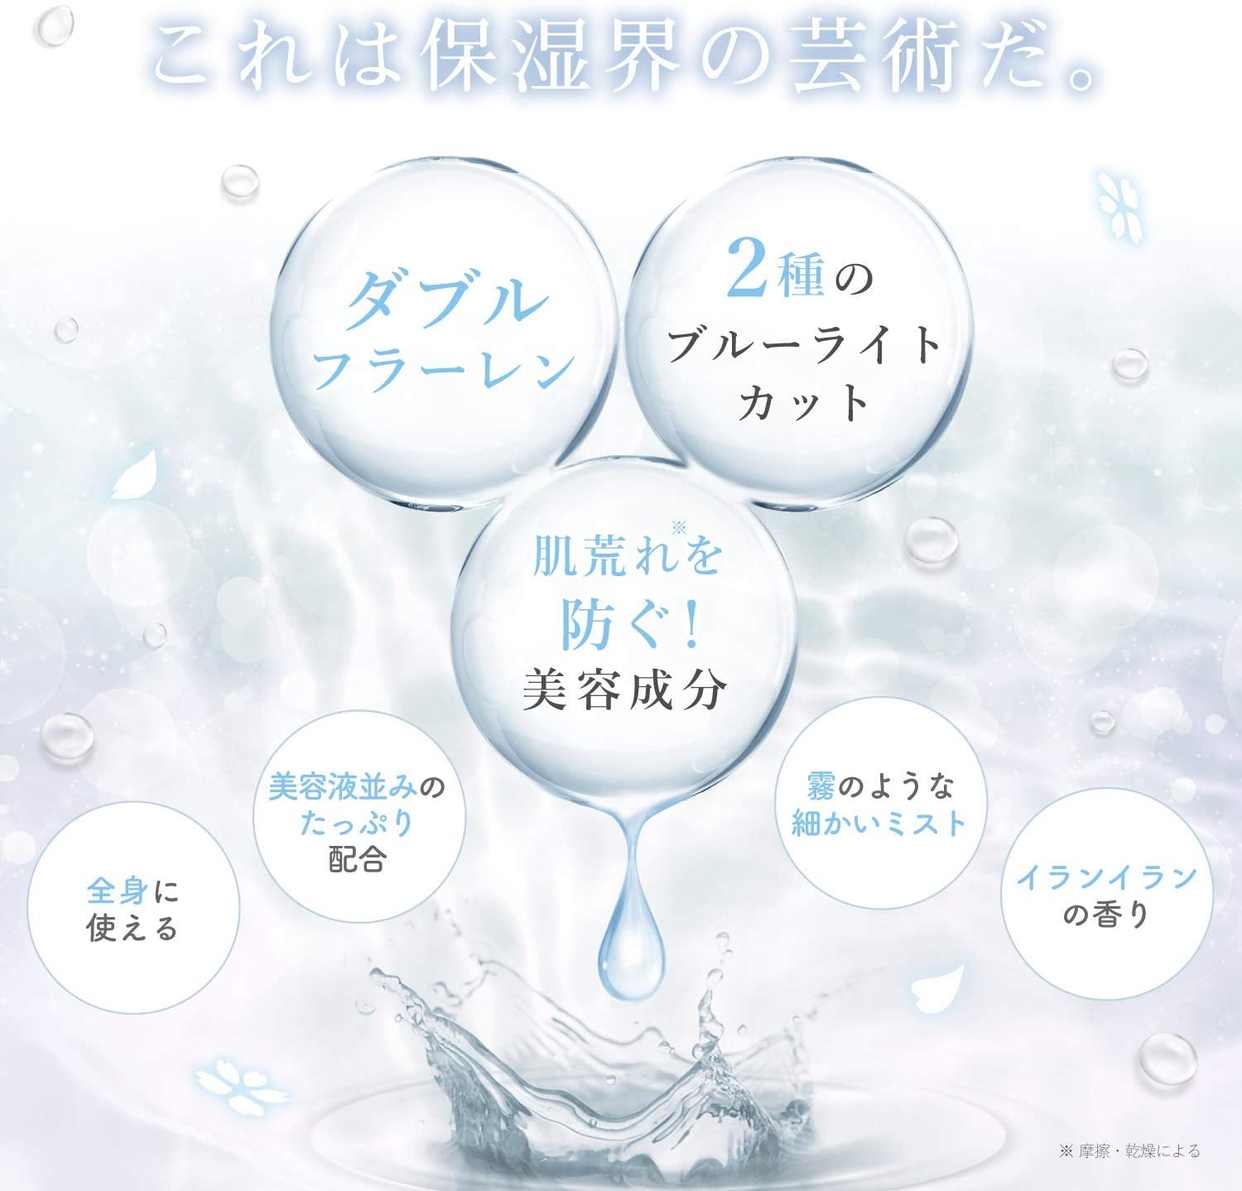 Shiro no Sakura.(シロノサクラ) White Snow Mist ～雪模様～の商品画像3 